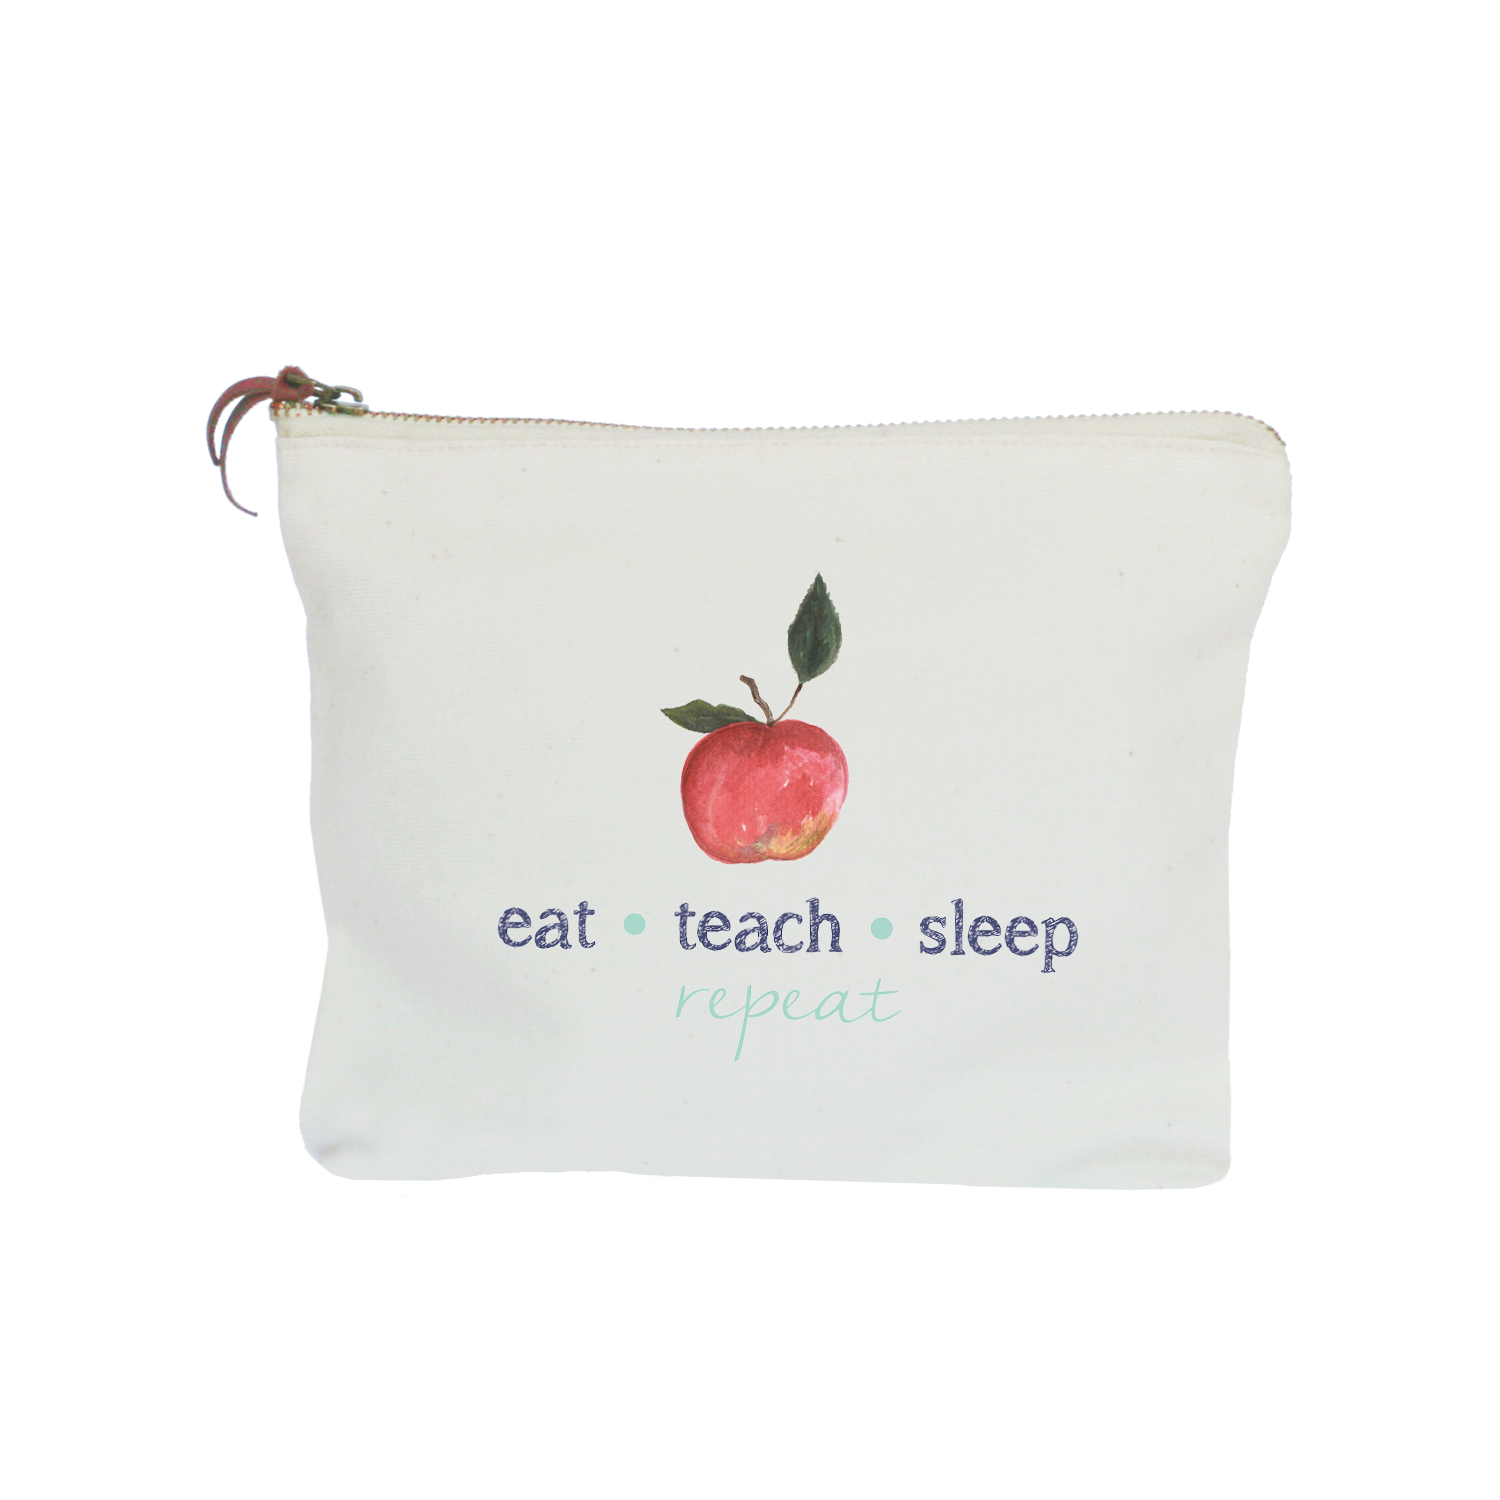 eat teach sleep repeat zipper pouch